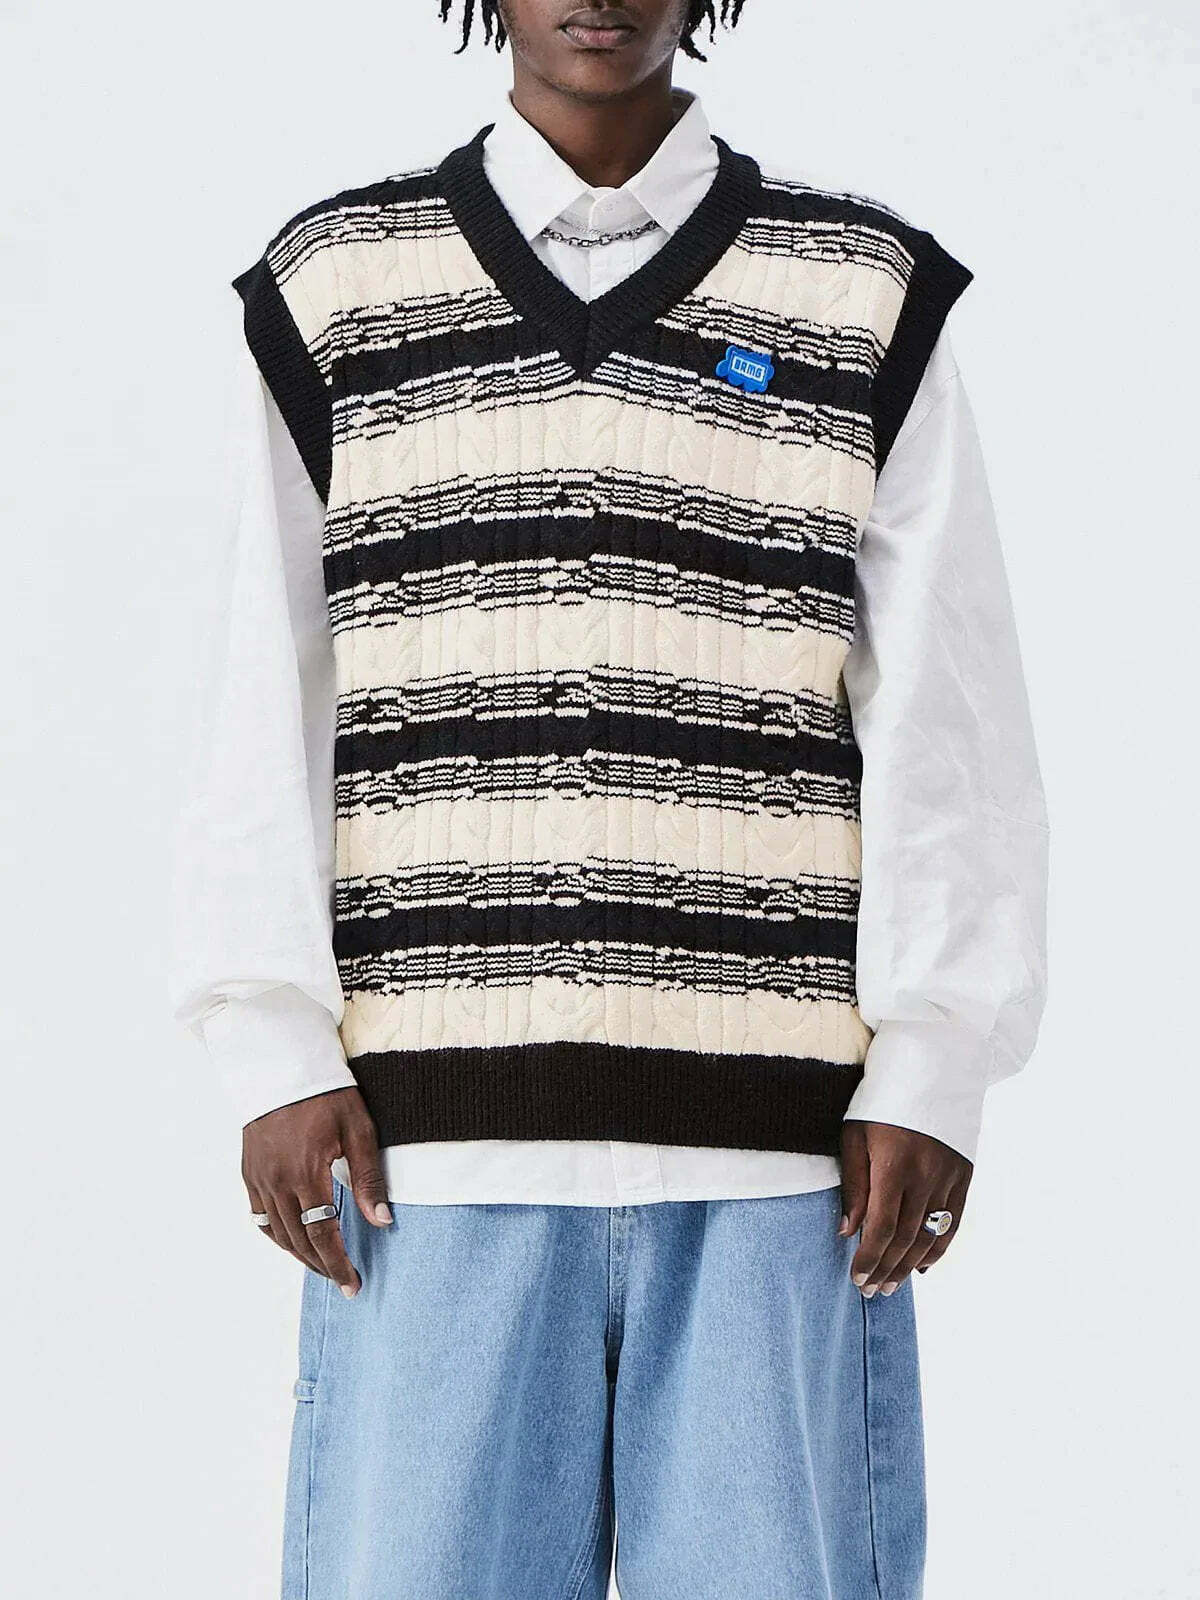 colorblock stripe sweater vest edgy retro statement piece 5631